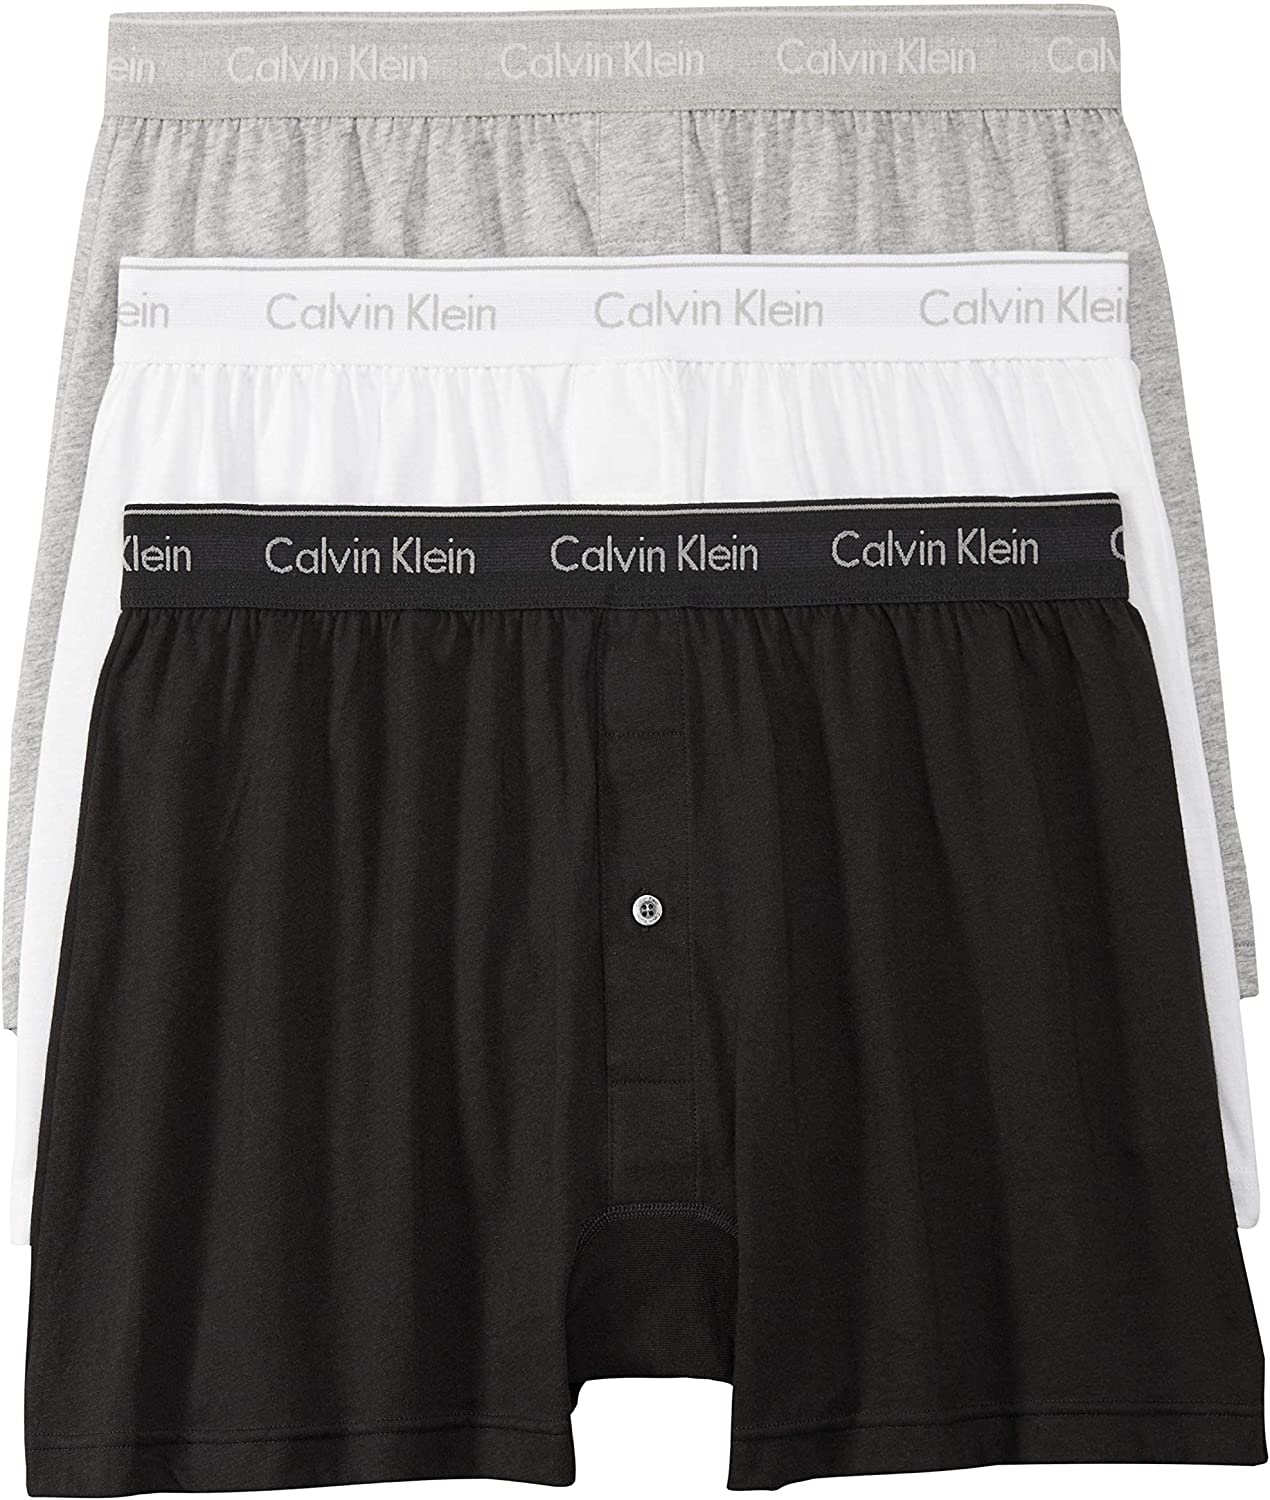 Calvin Klein Men's 3pk Cotton Knit Boxer Shorts Multi Color Style NB40 –  The Right Choice